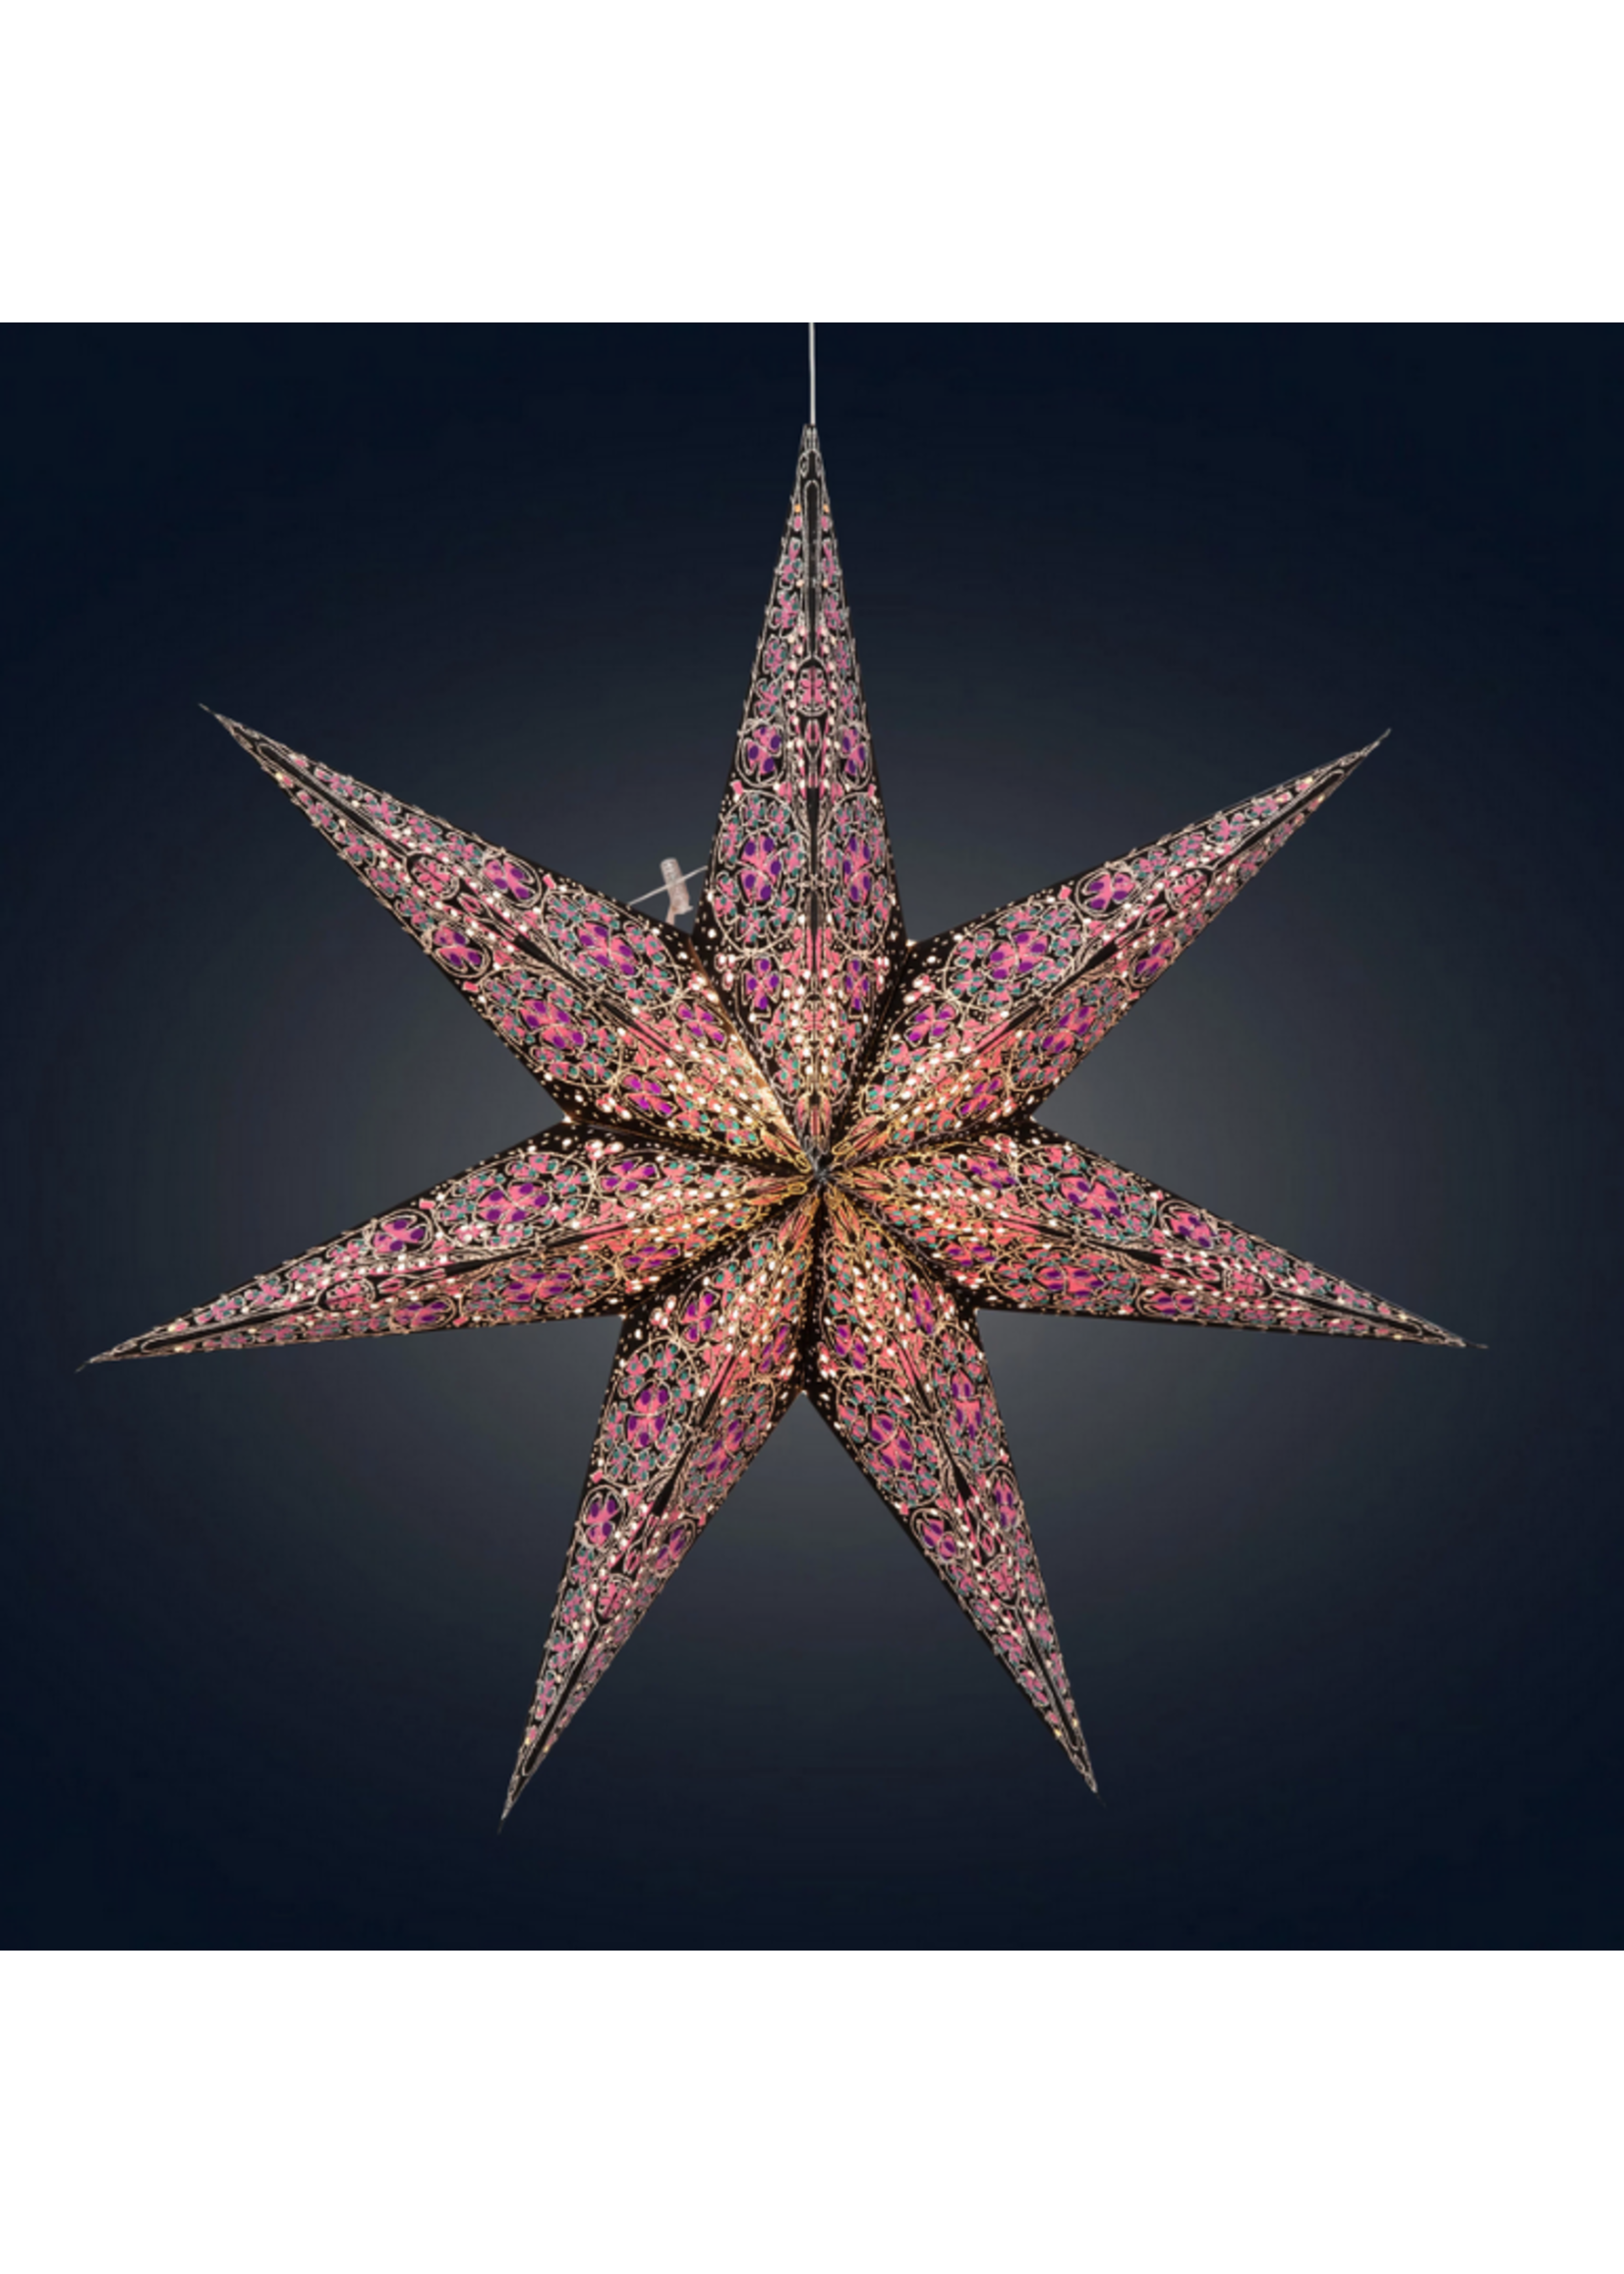 CATHEDRAL 7-Pointed Black & Pink Star Lantern Light